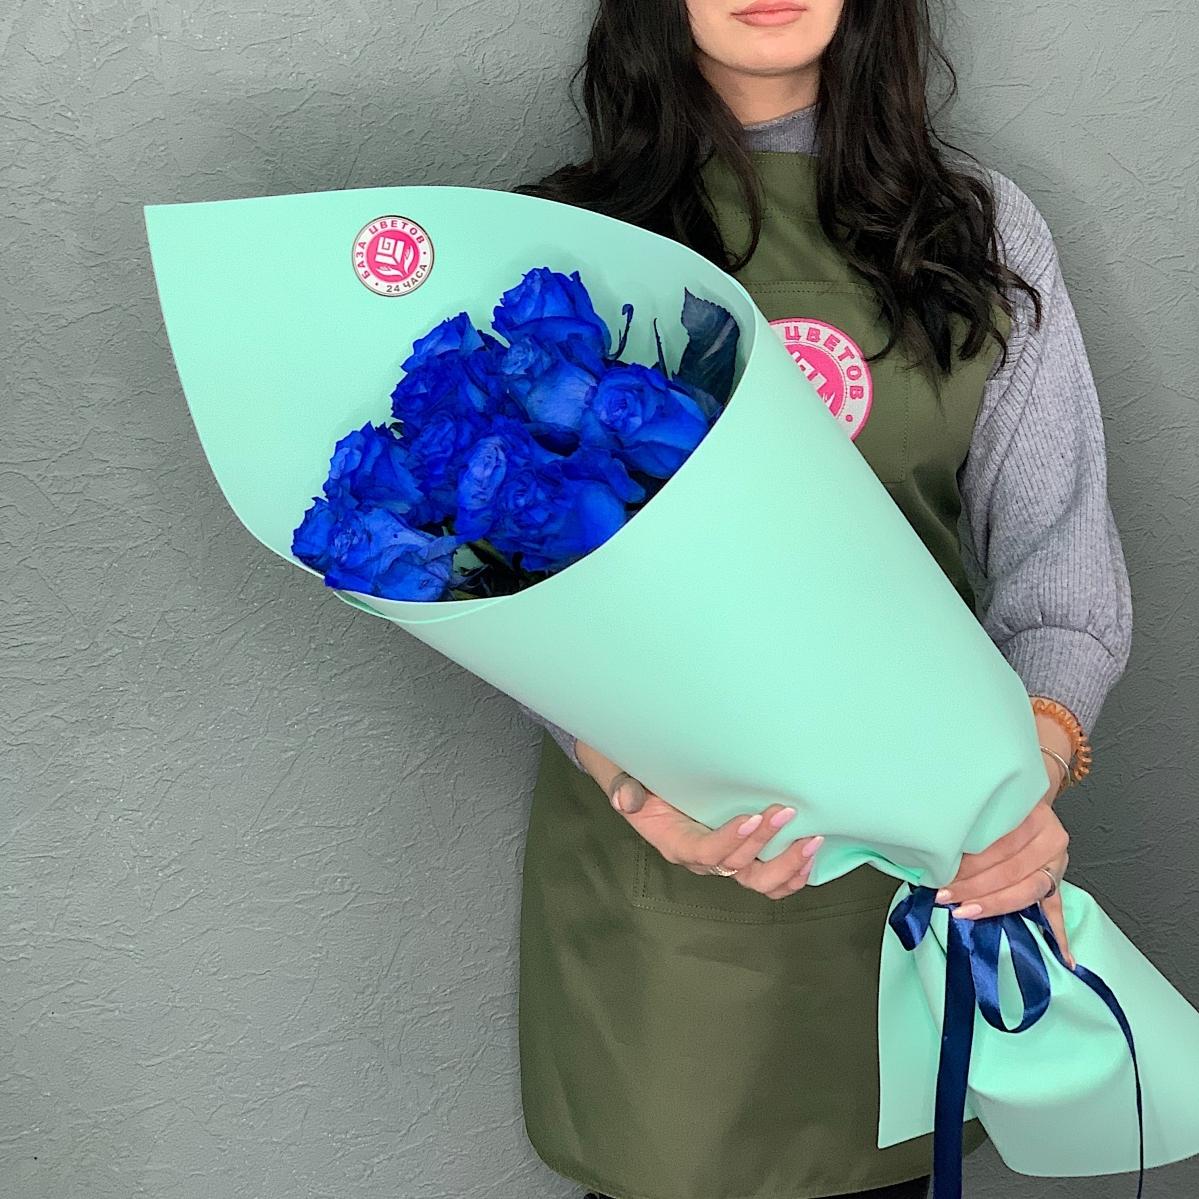 Букеты из синих роз (Эквадор) Артикул: 14950tm